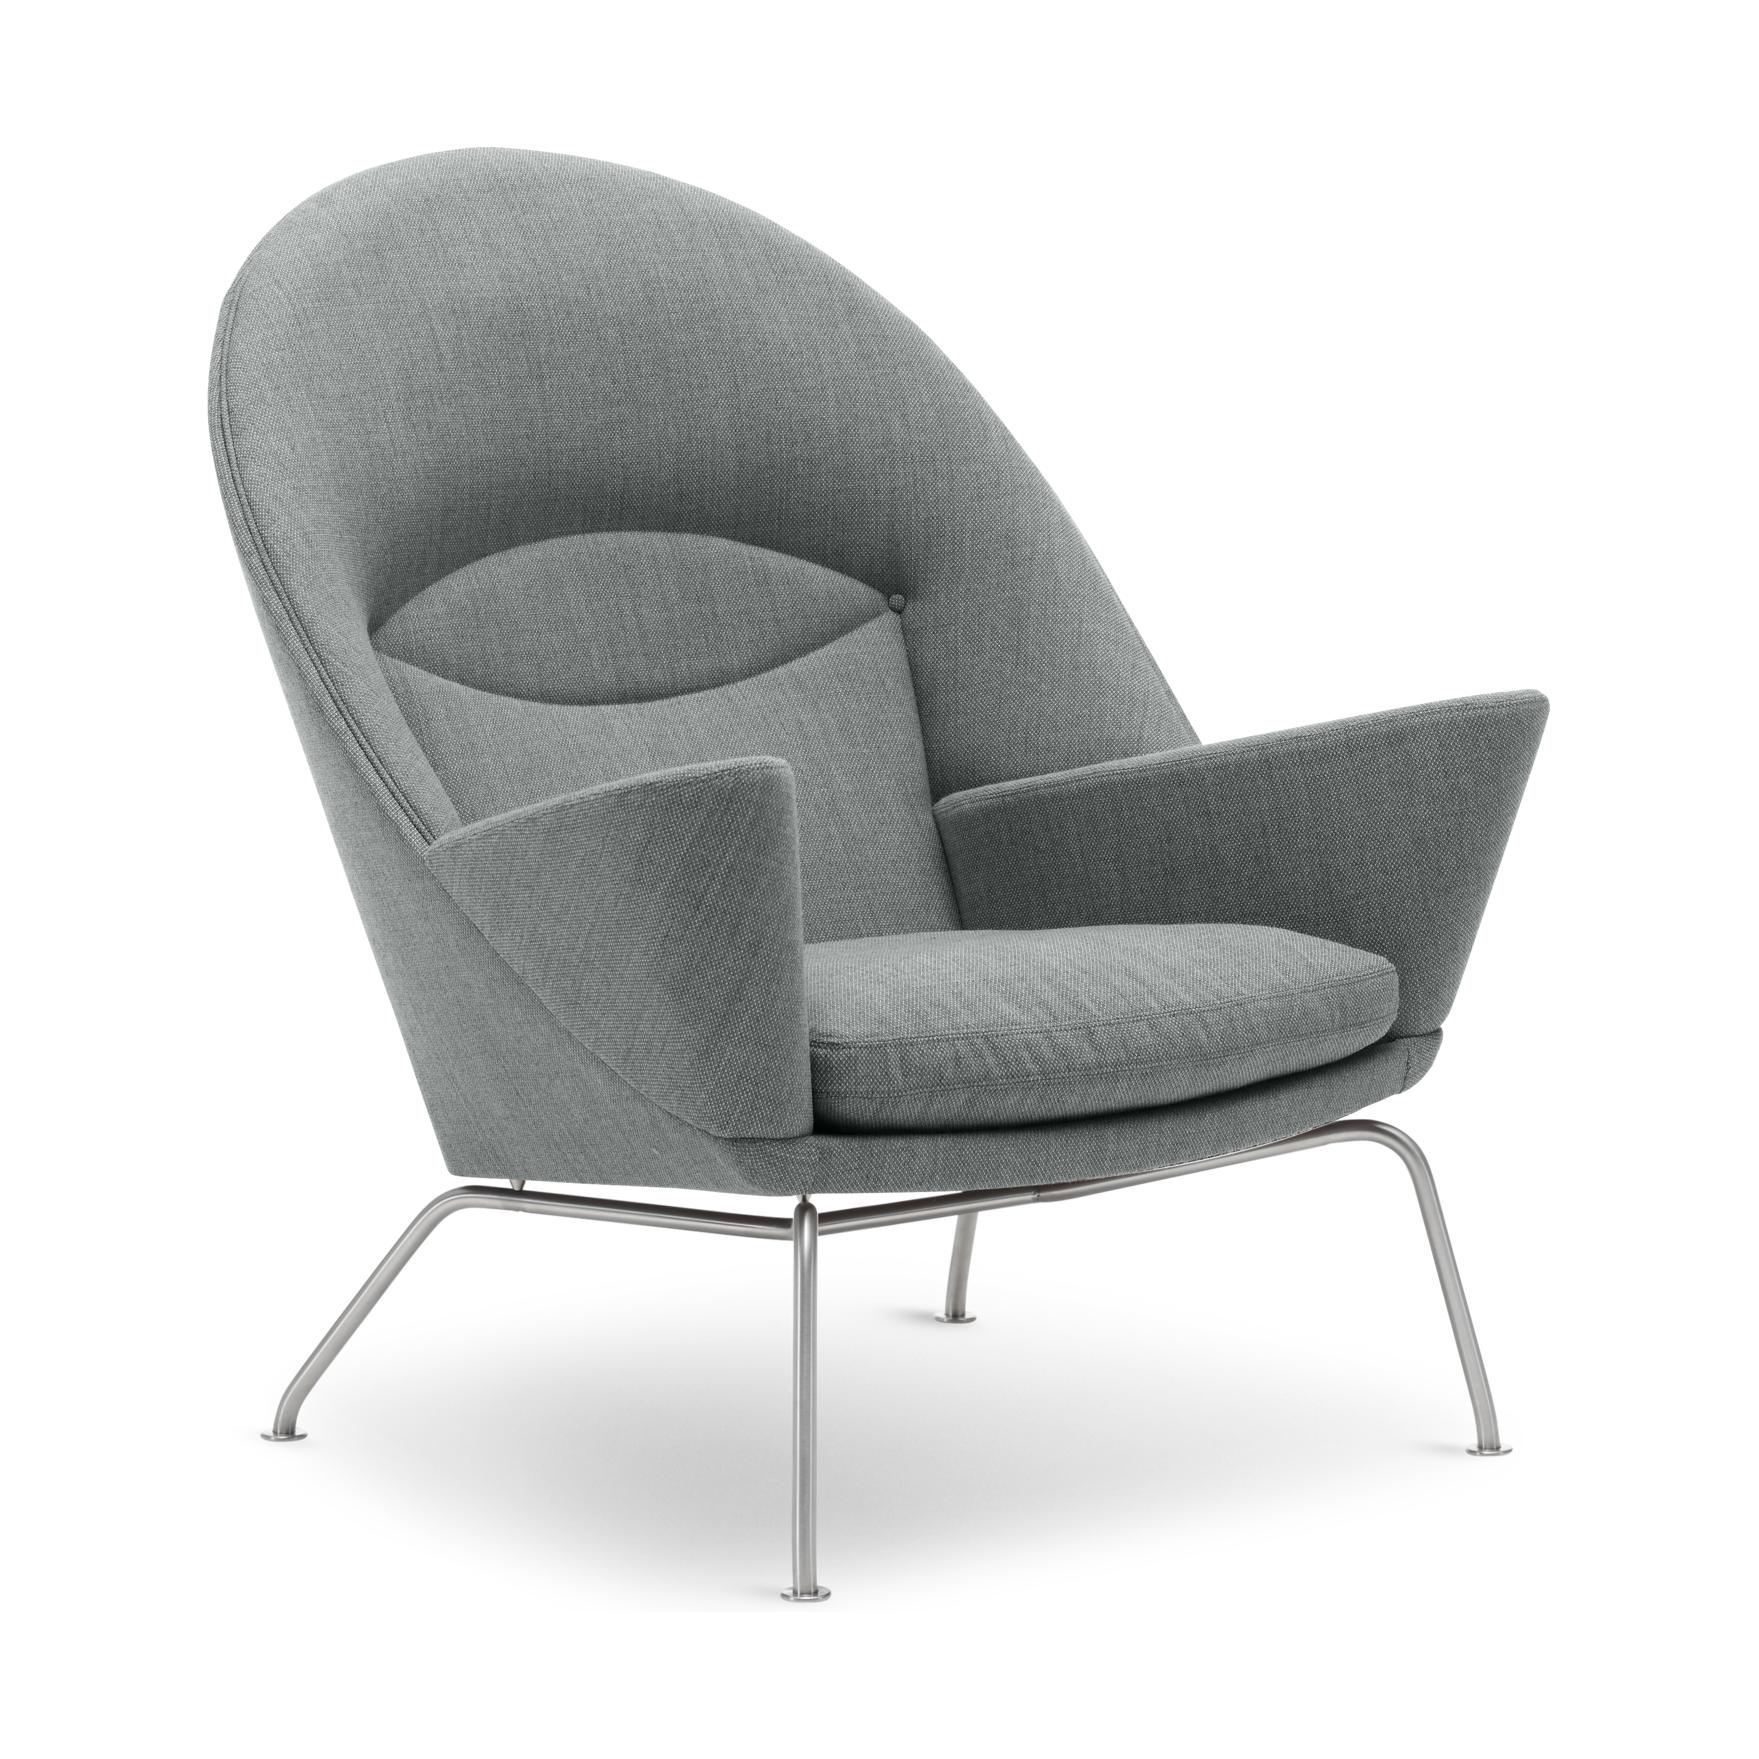 Carl Hansen CH468 sedia oculus, tessuto in acciaio/grigio chiaro